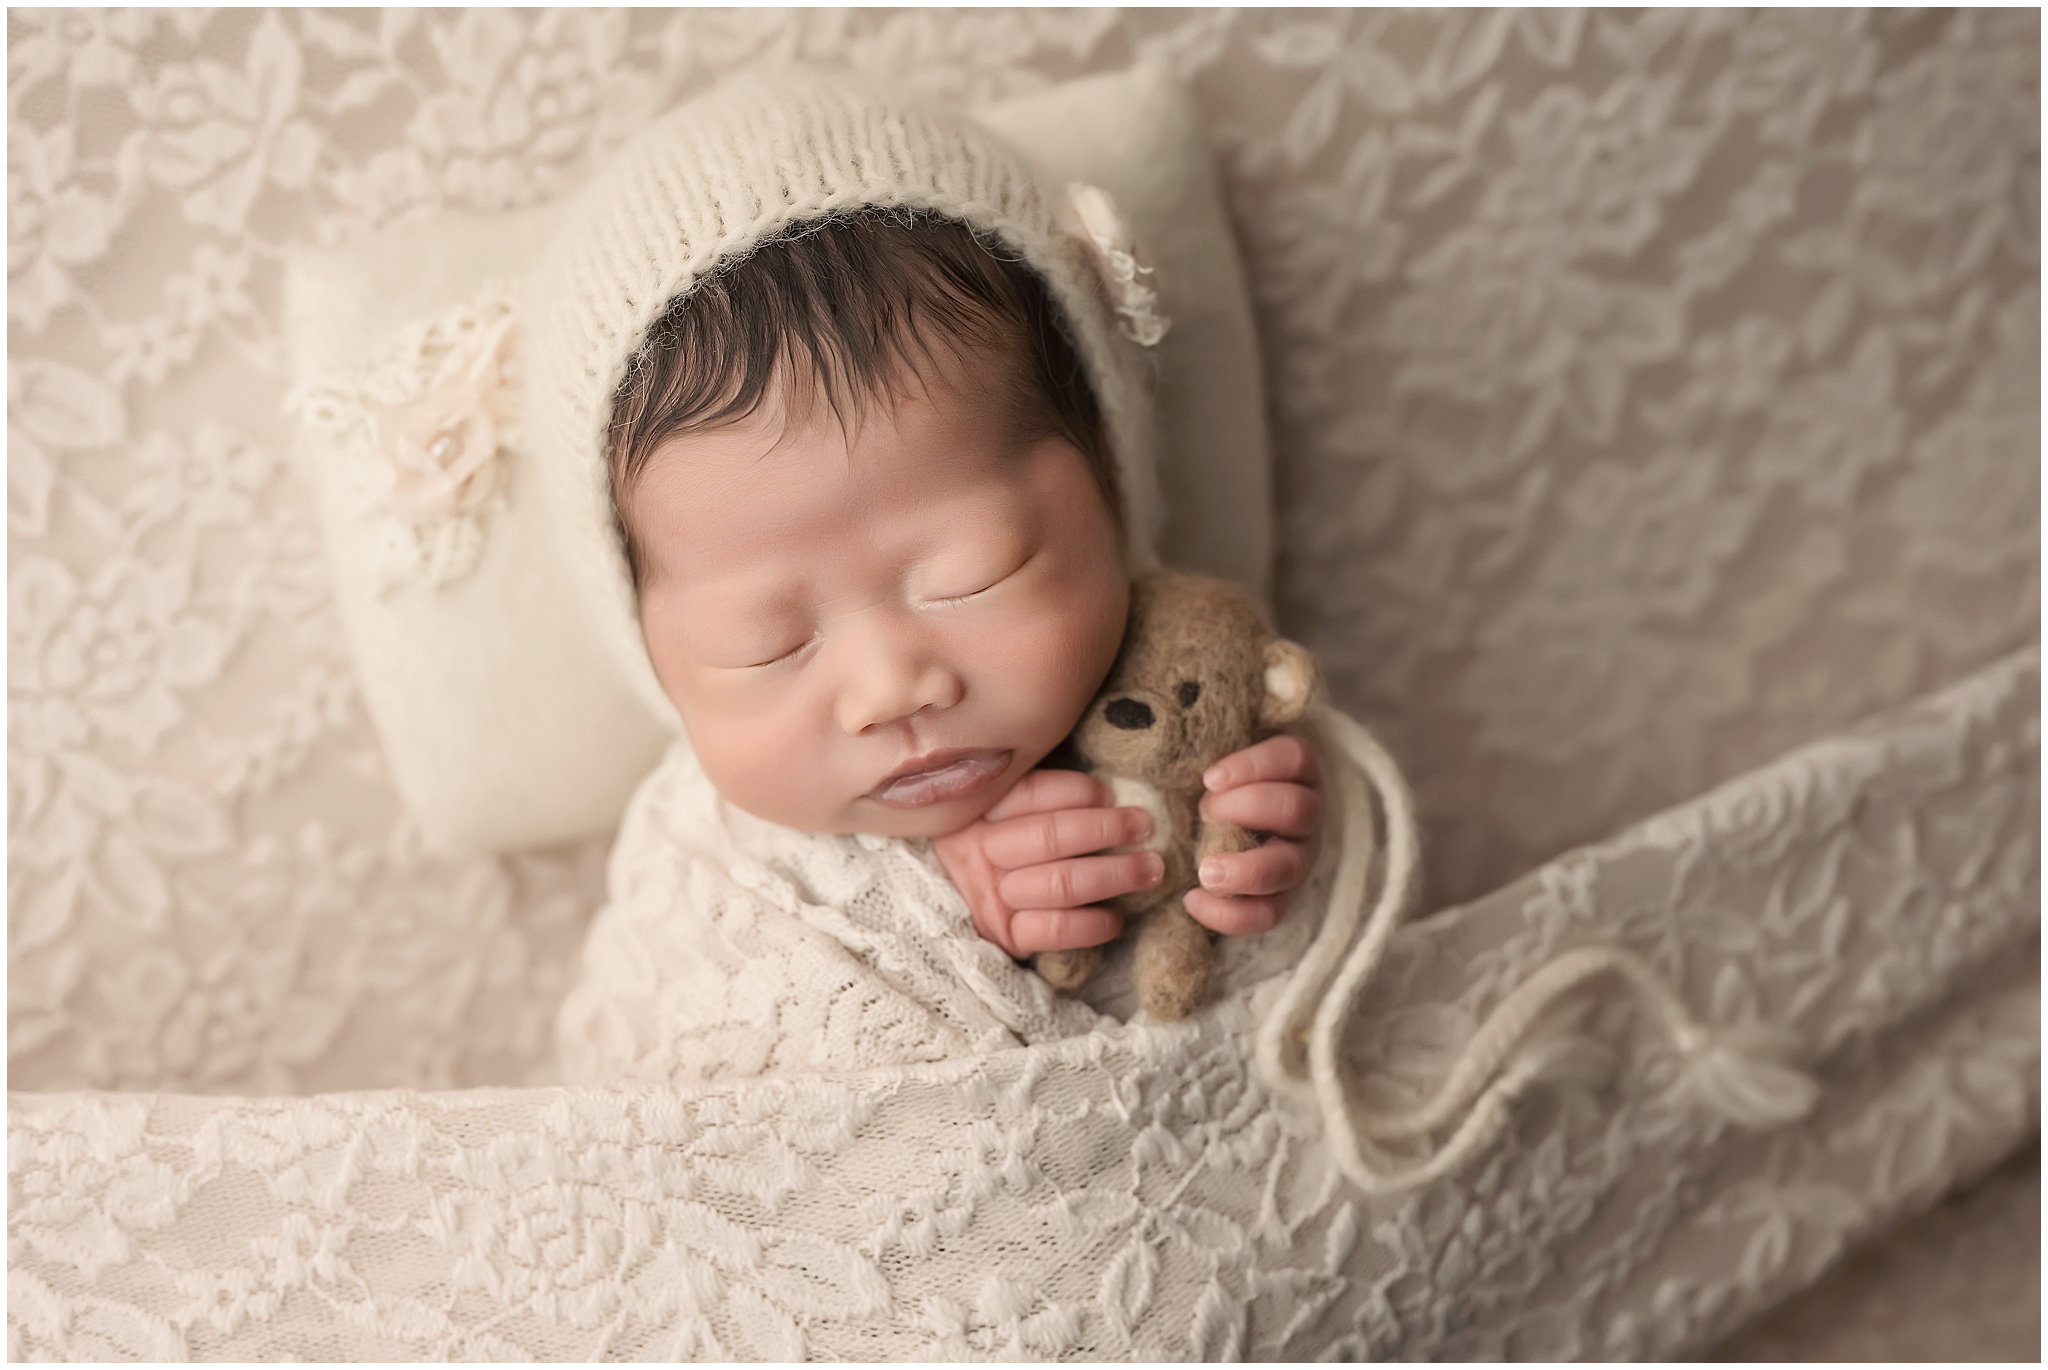 newborn baby holding teddy bear during newborn session in london ontario